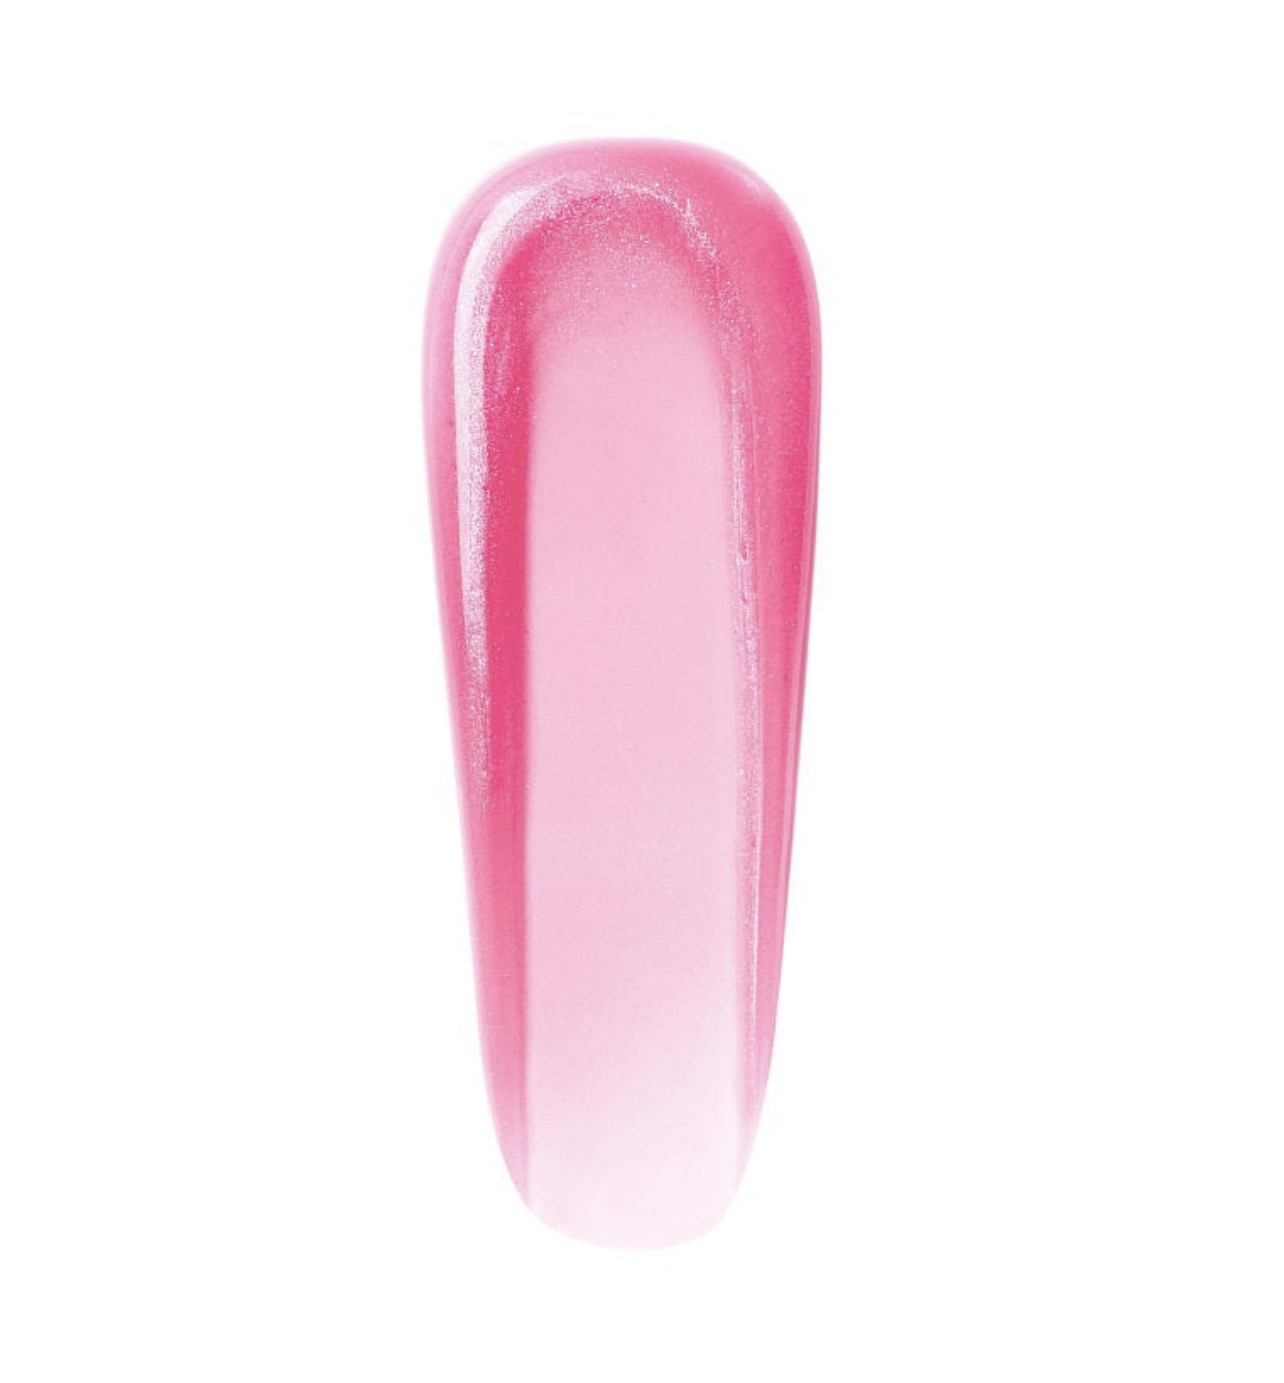 Victoria’s Secret - Flavor Gloss | Pink Mimosa | 13 mL